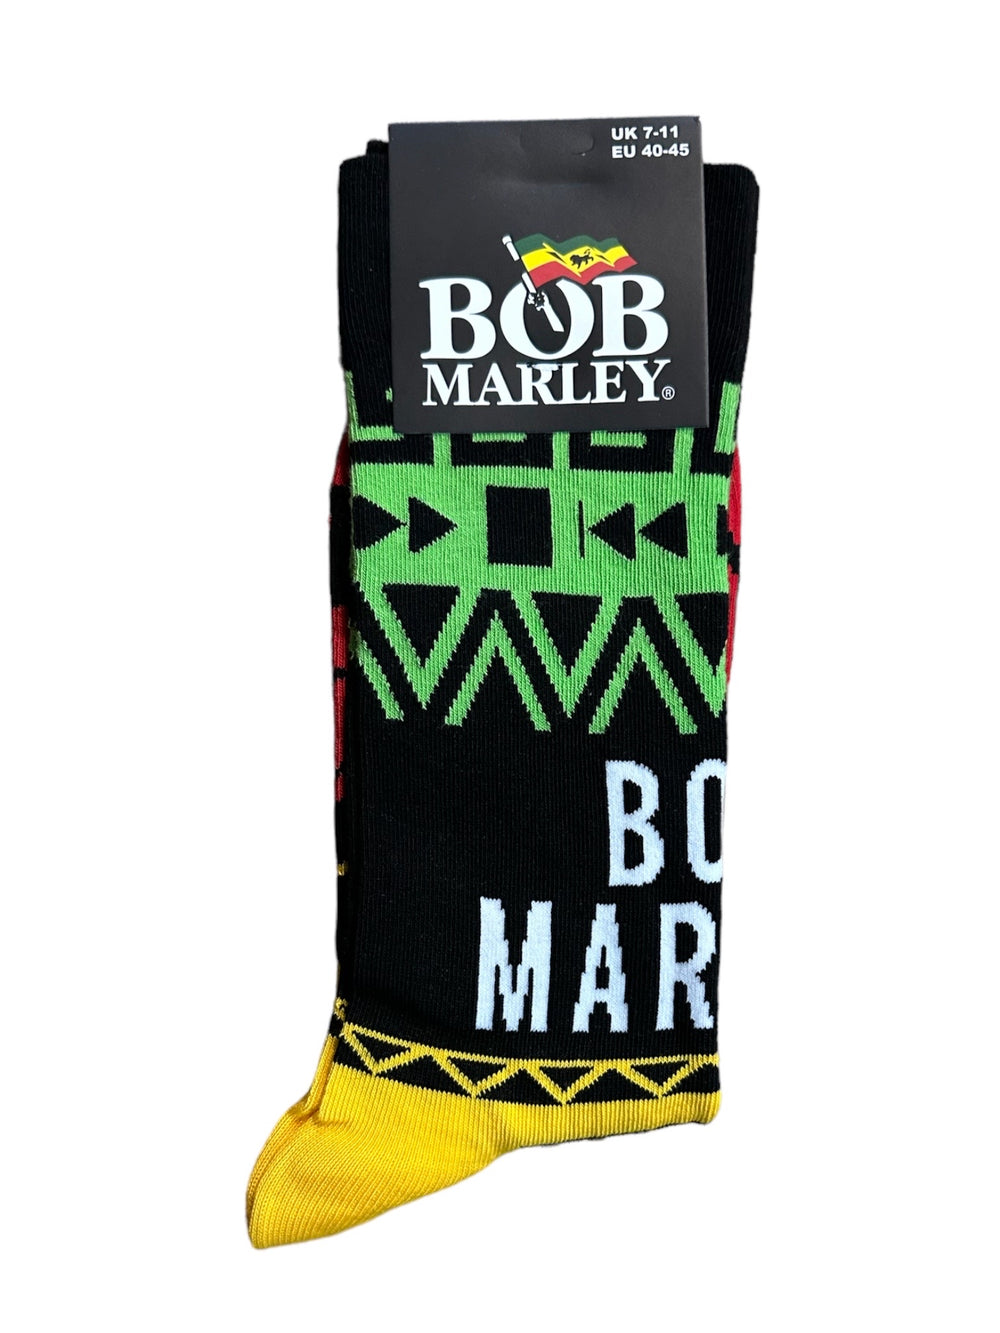 Bob Marley Press Play Black Official Product 1 Pair Jacquard Socks Brand New